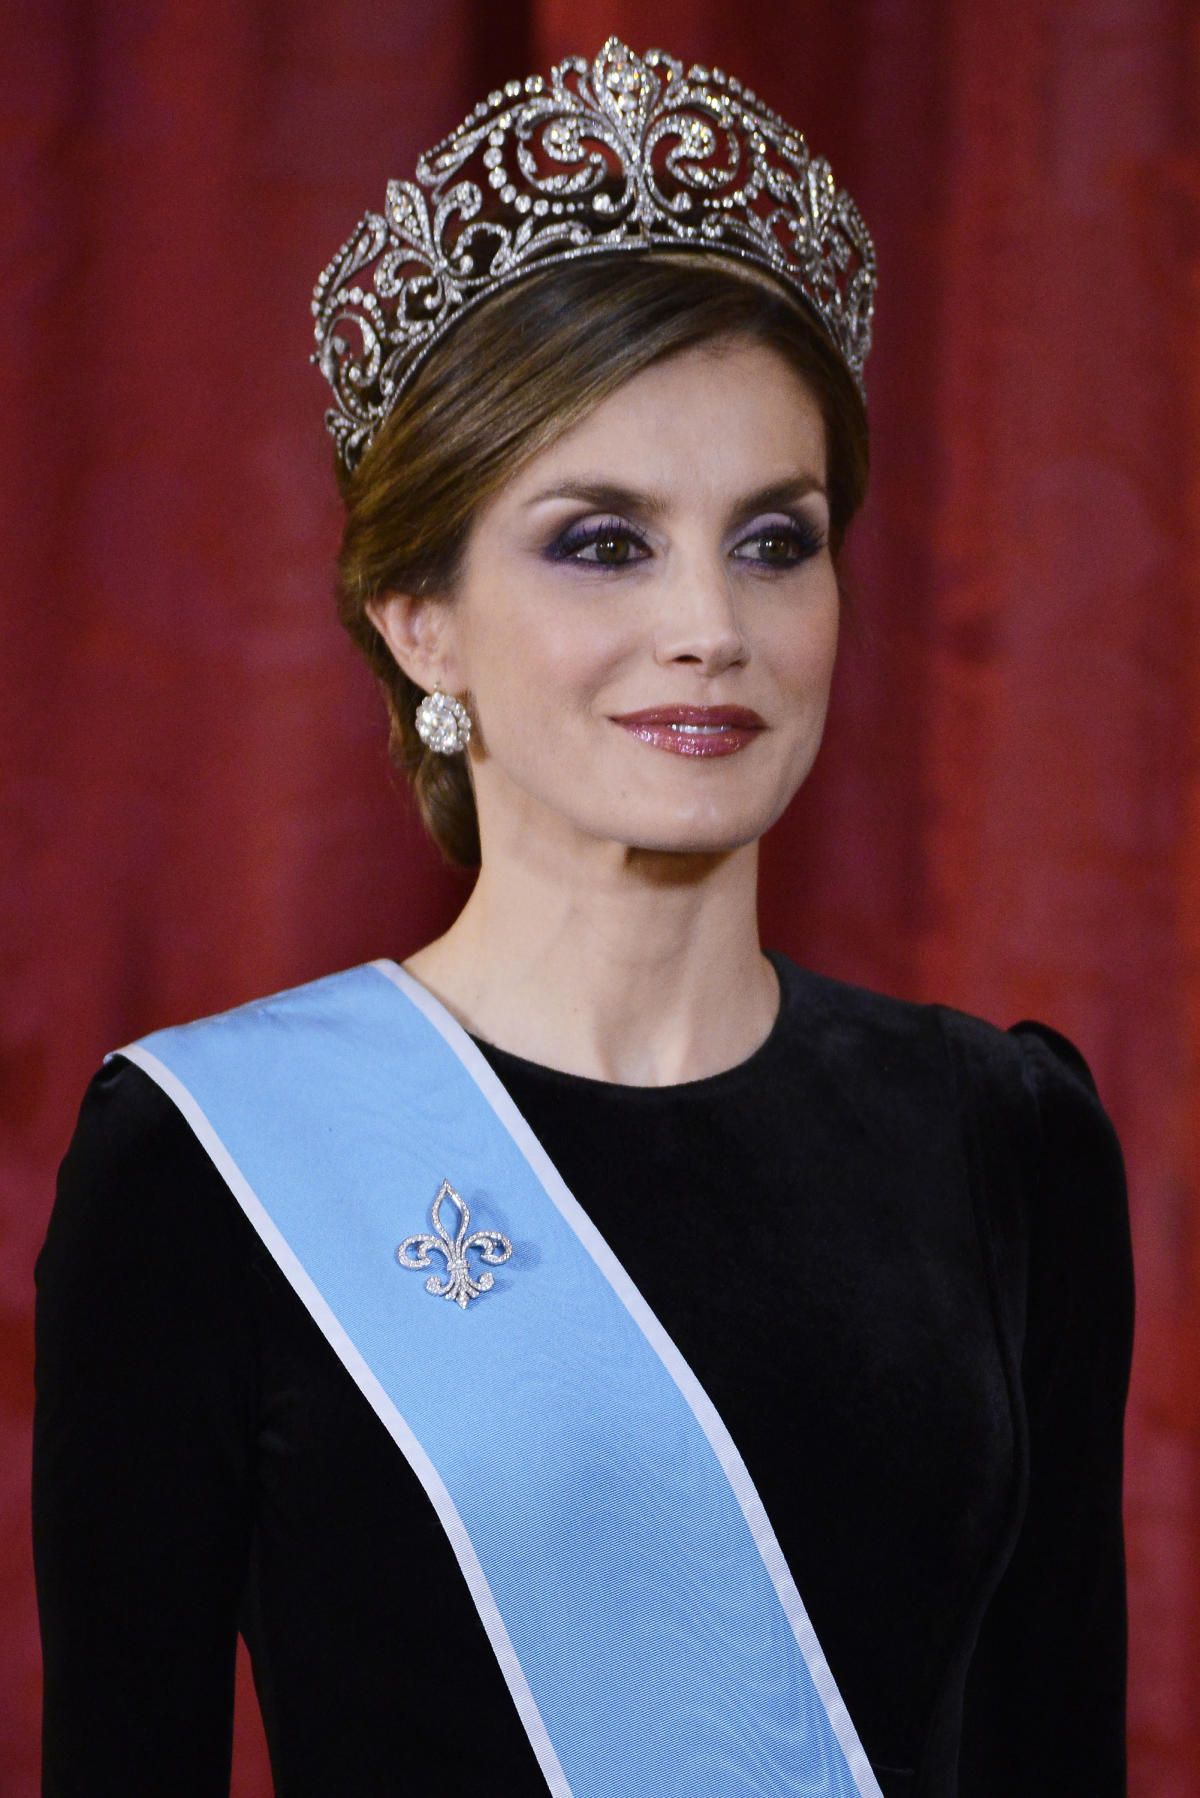 Letizia Spain Rocks Massive Tiara a Queen